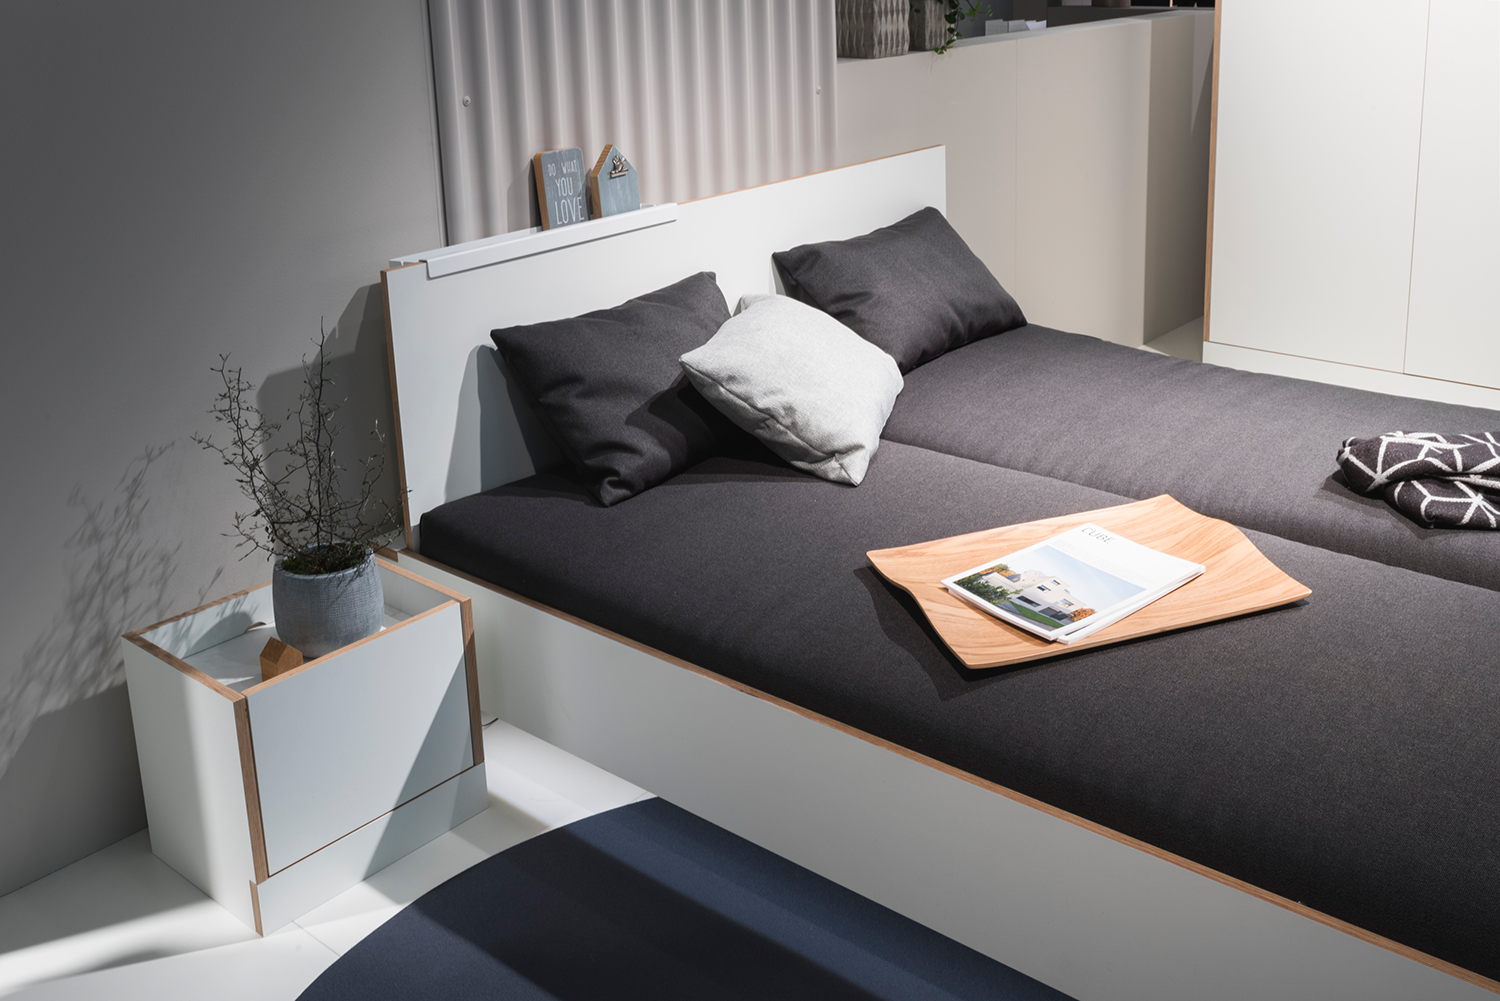 FLAI Doppelbett mit Lattenrost starr - KAQTU Design